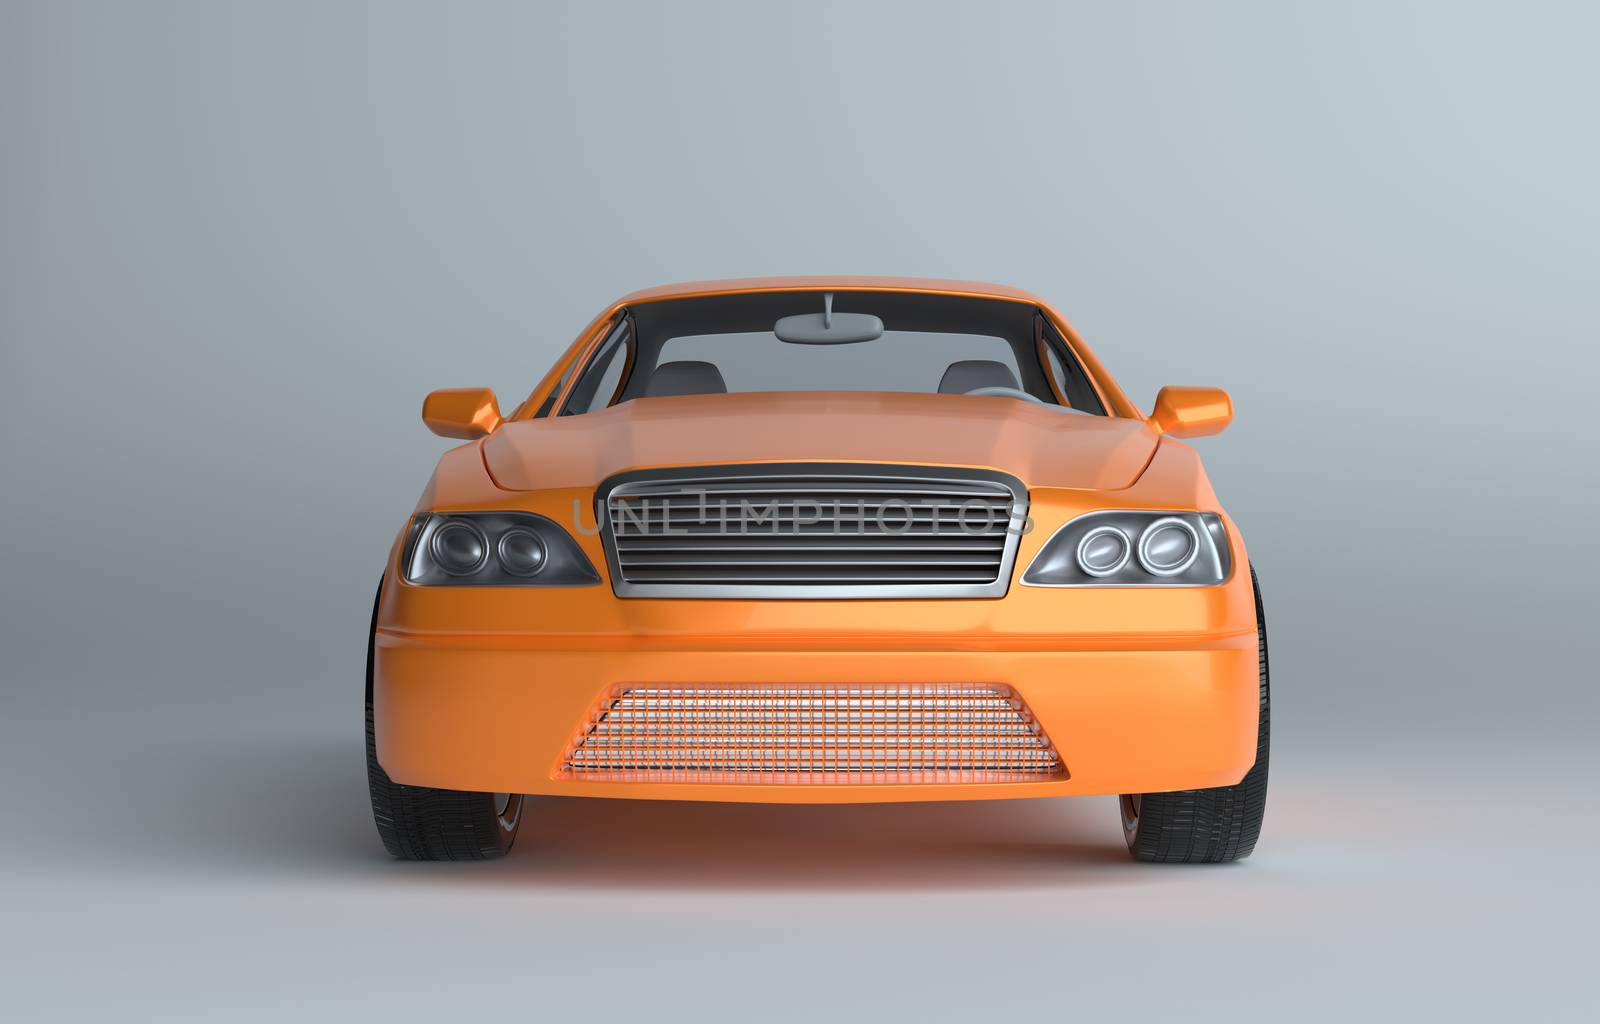 3d illustration of a luxury sports car, studio background